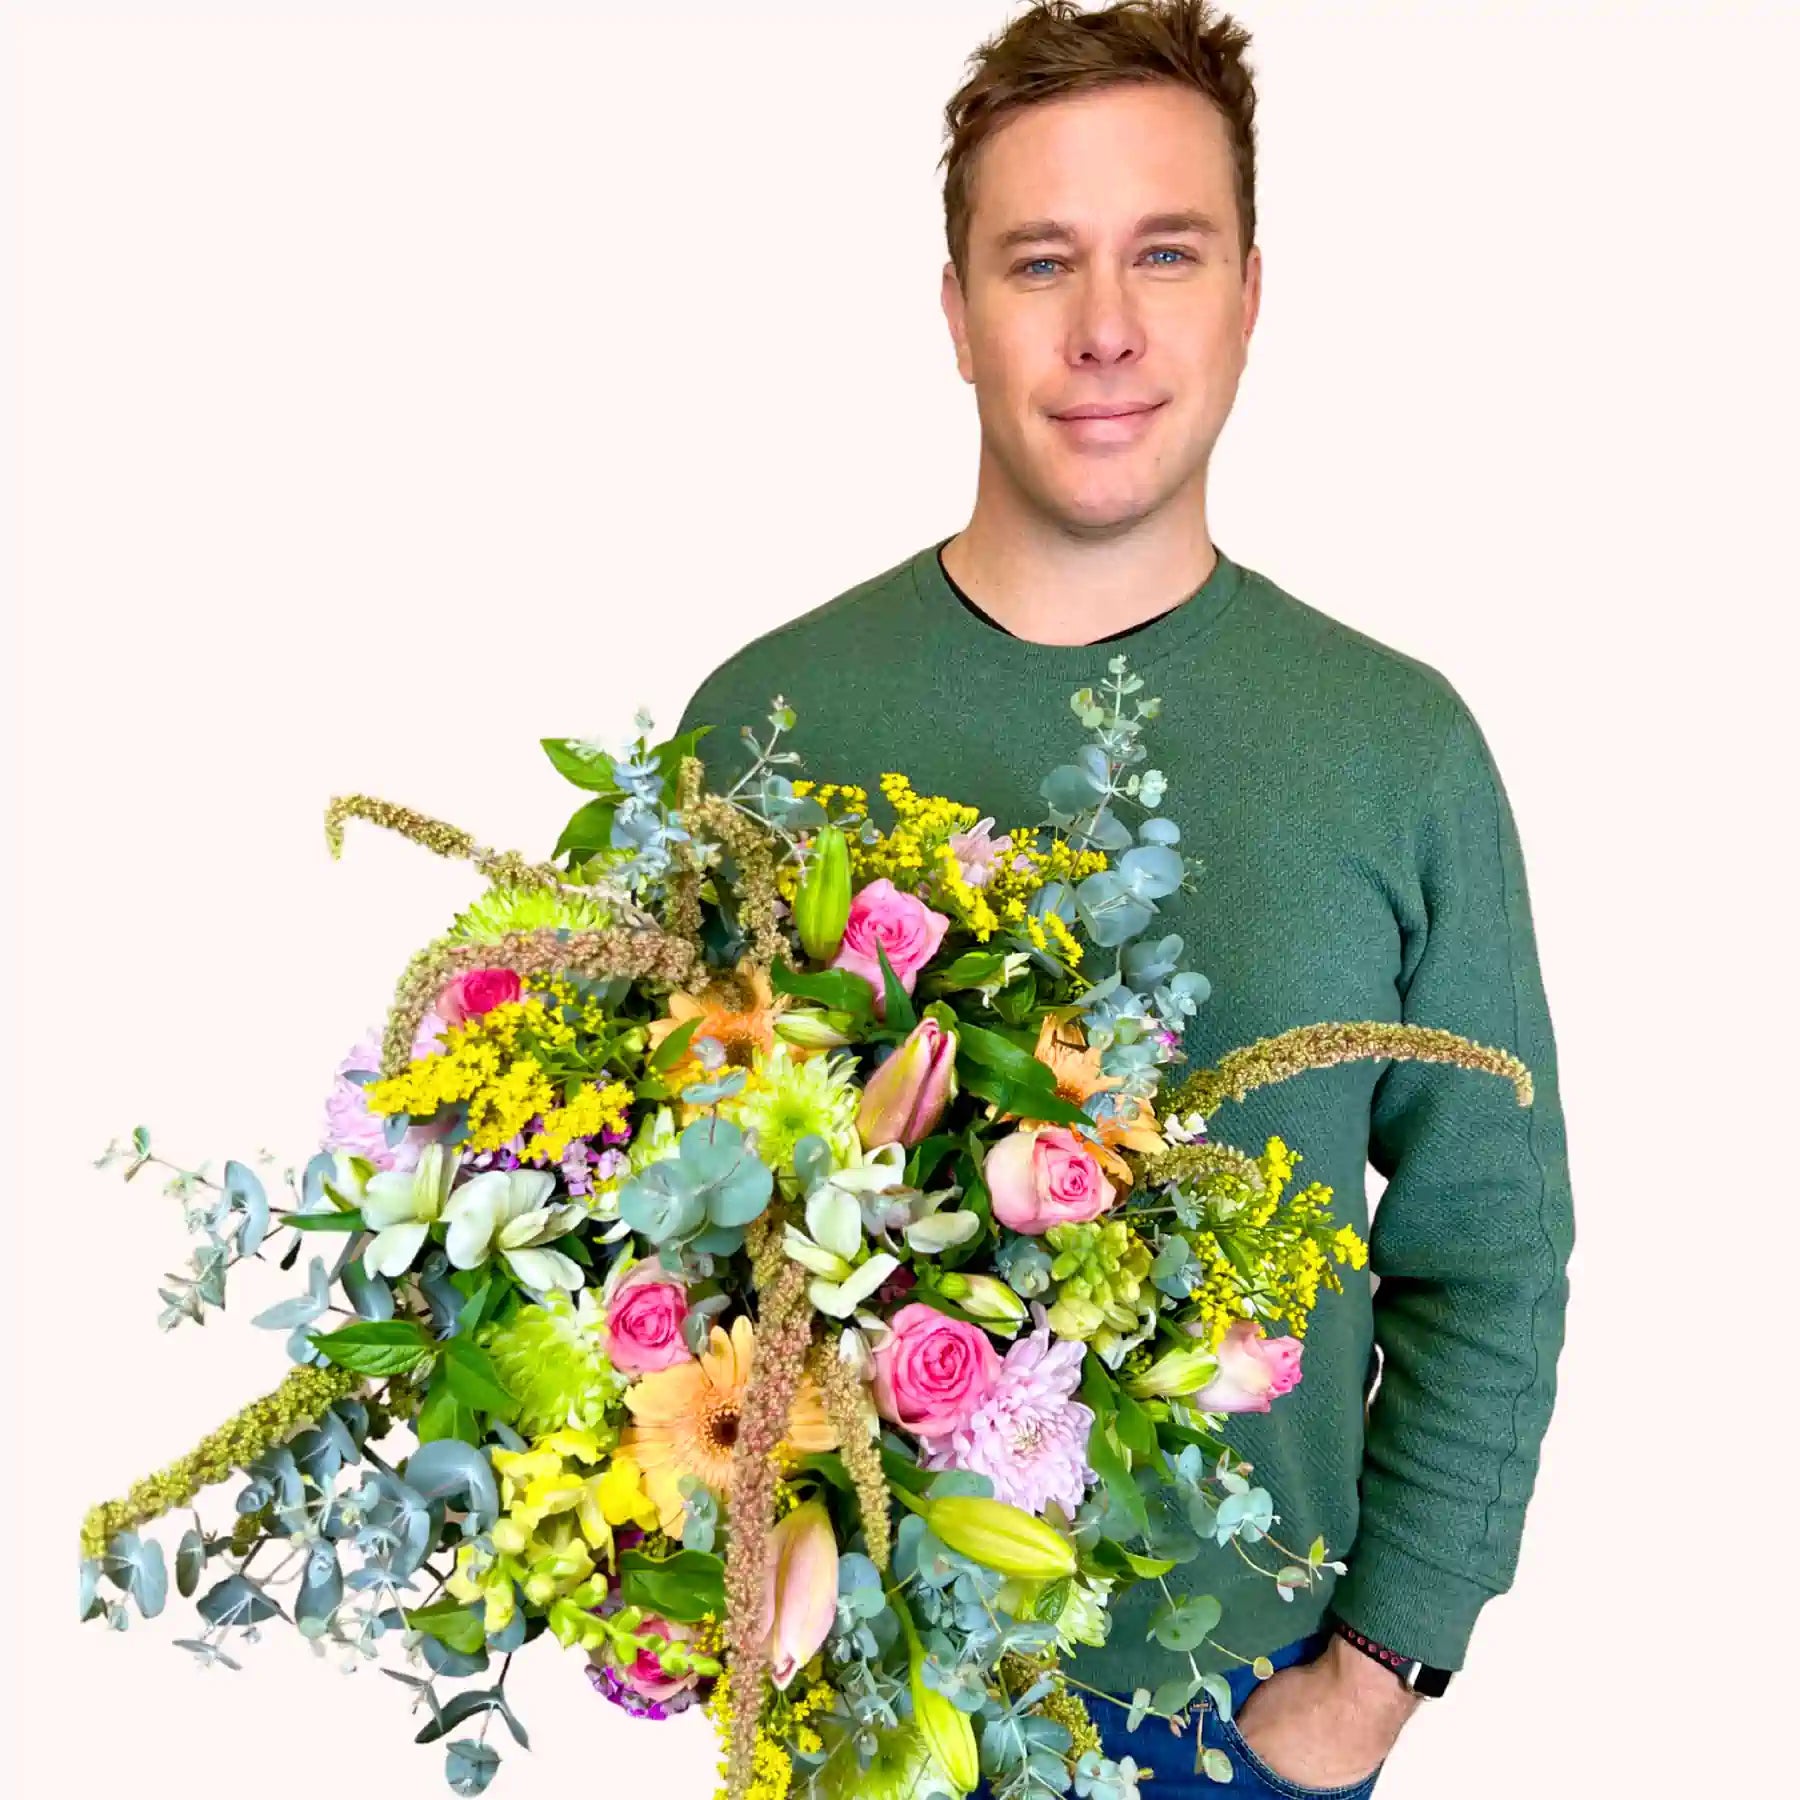 Nick's Flower Bouquet